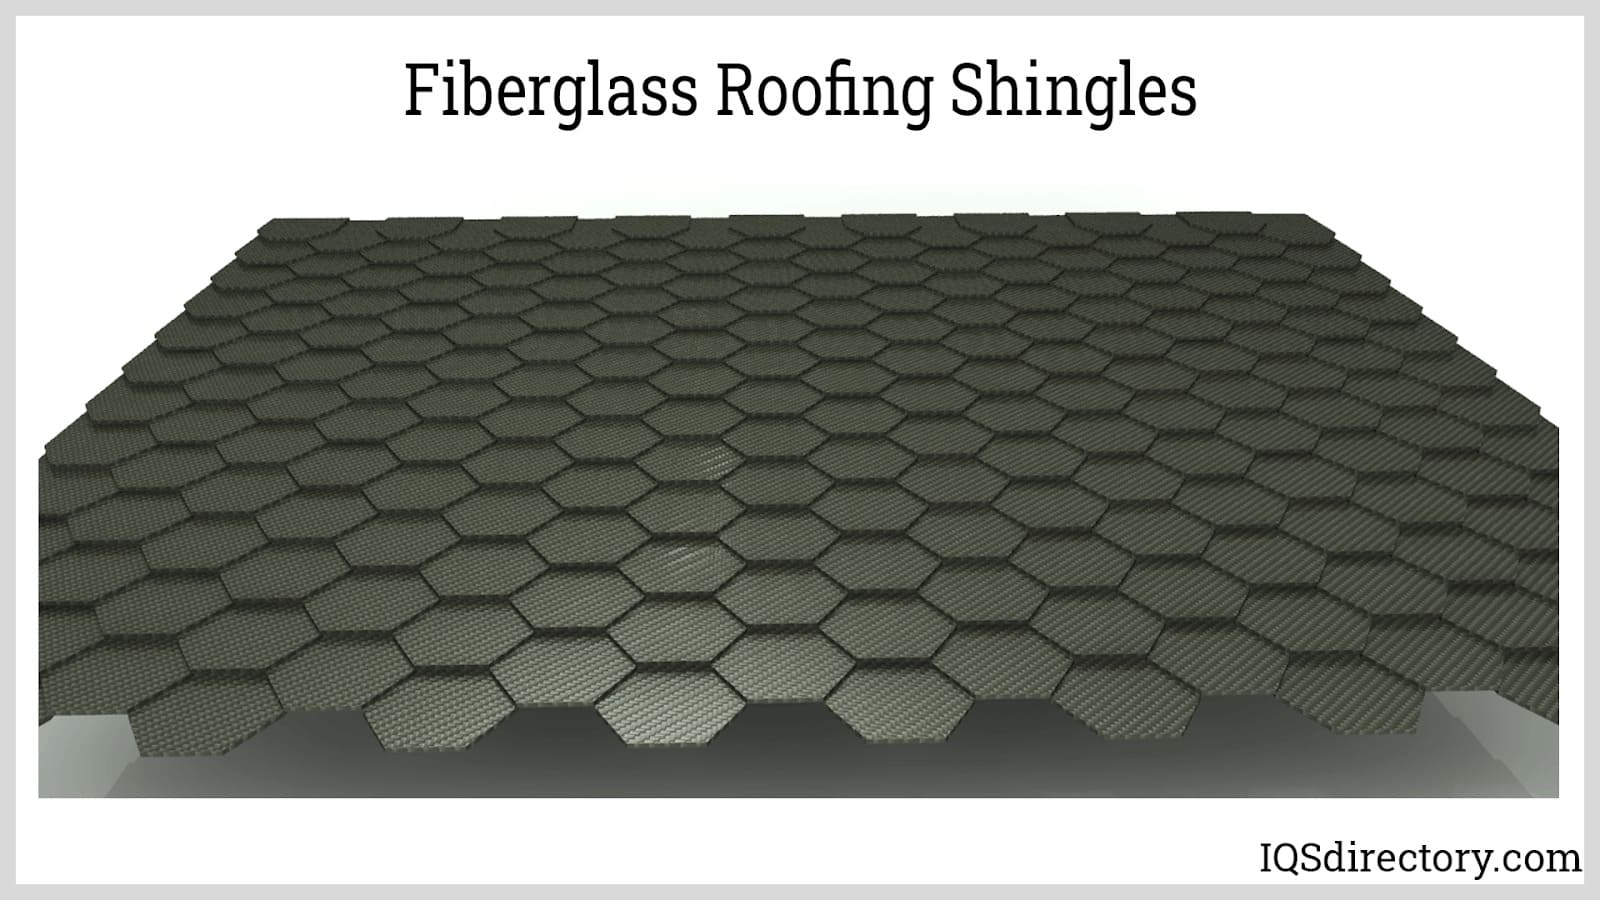 Fiberglass Roofing Shingles